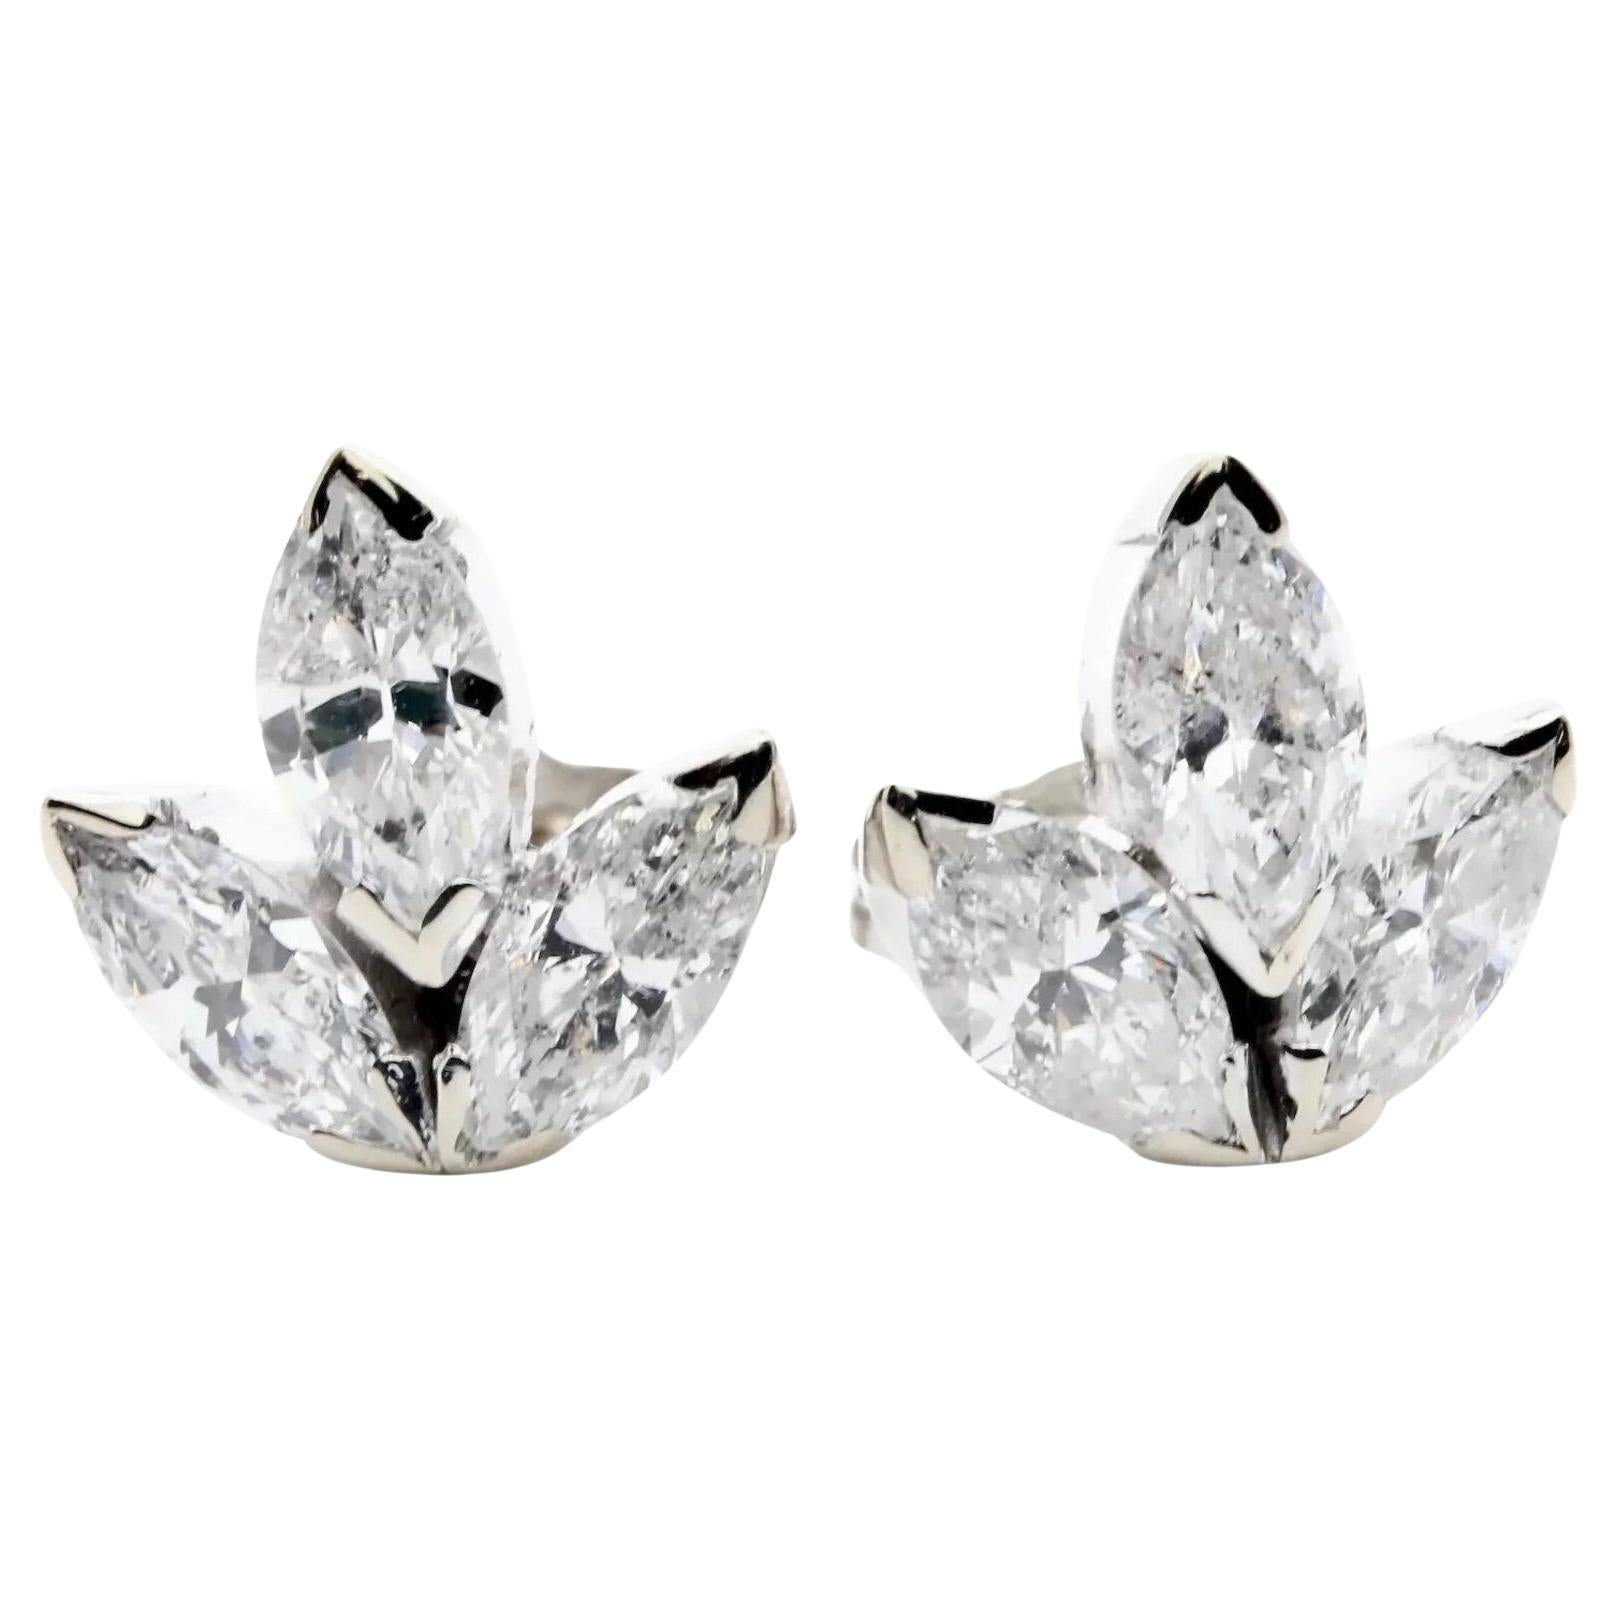  Leaf Motif 1.50ctw Marquise Diamond Stud Earrings in 14K White Gold